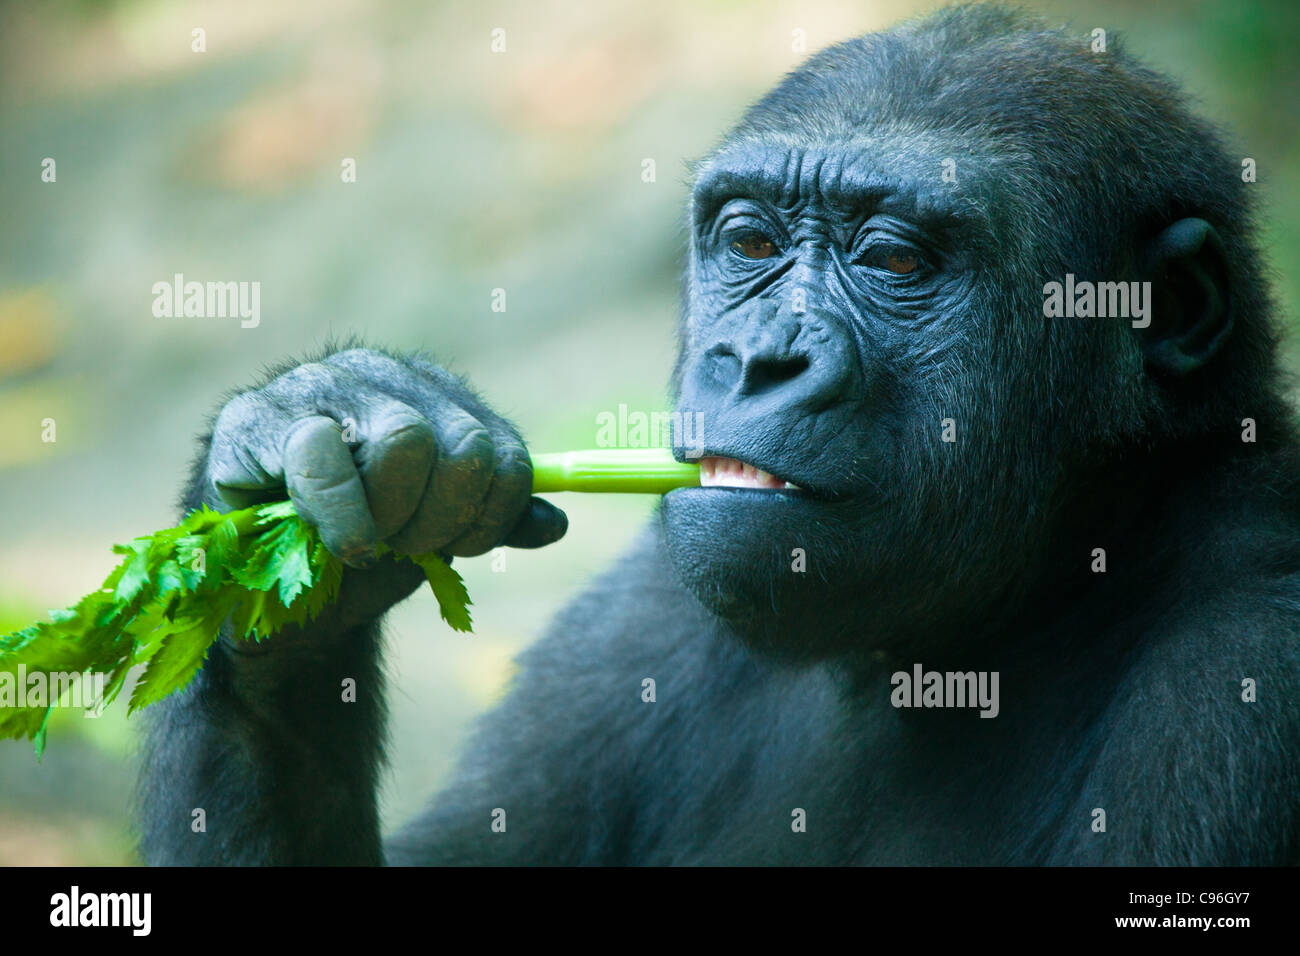 Gorila africana comiendo apio Stick Foto de stock